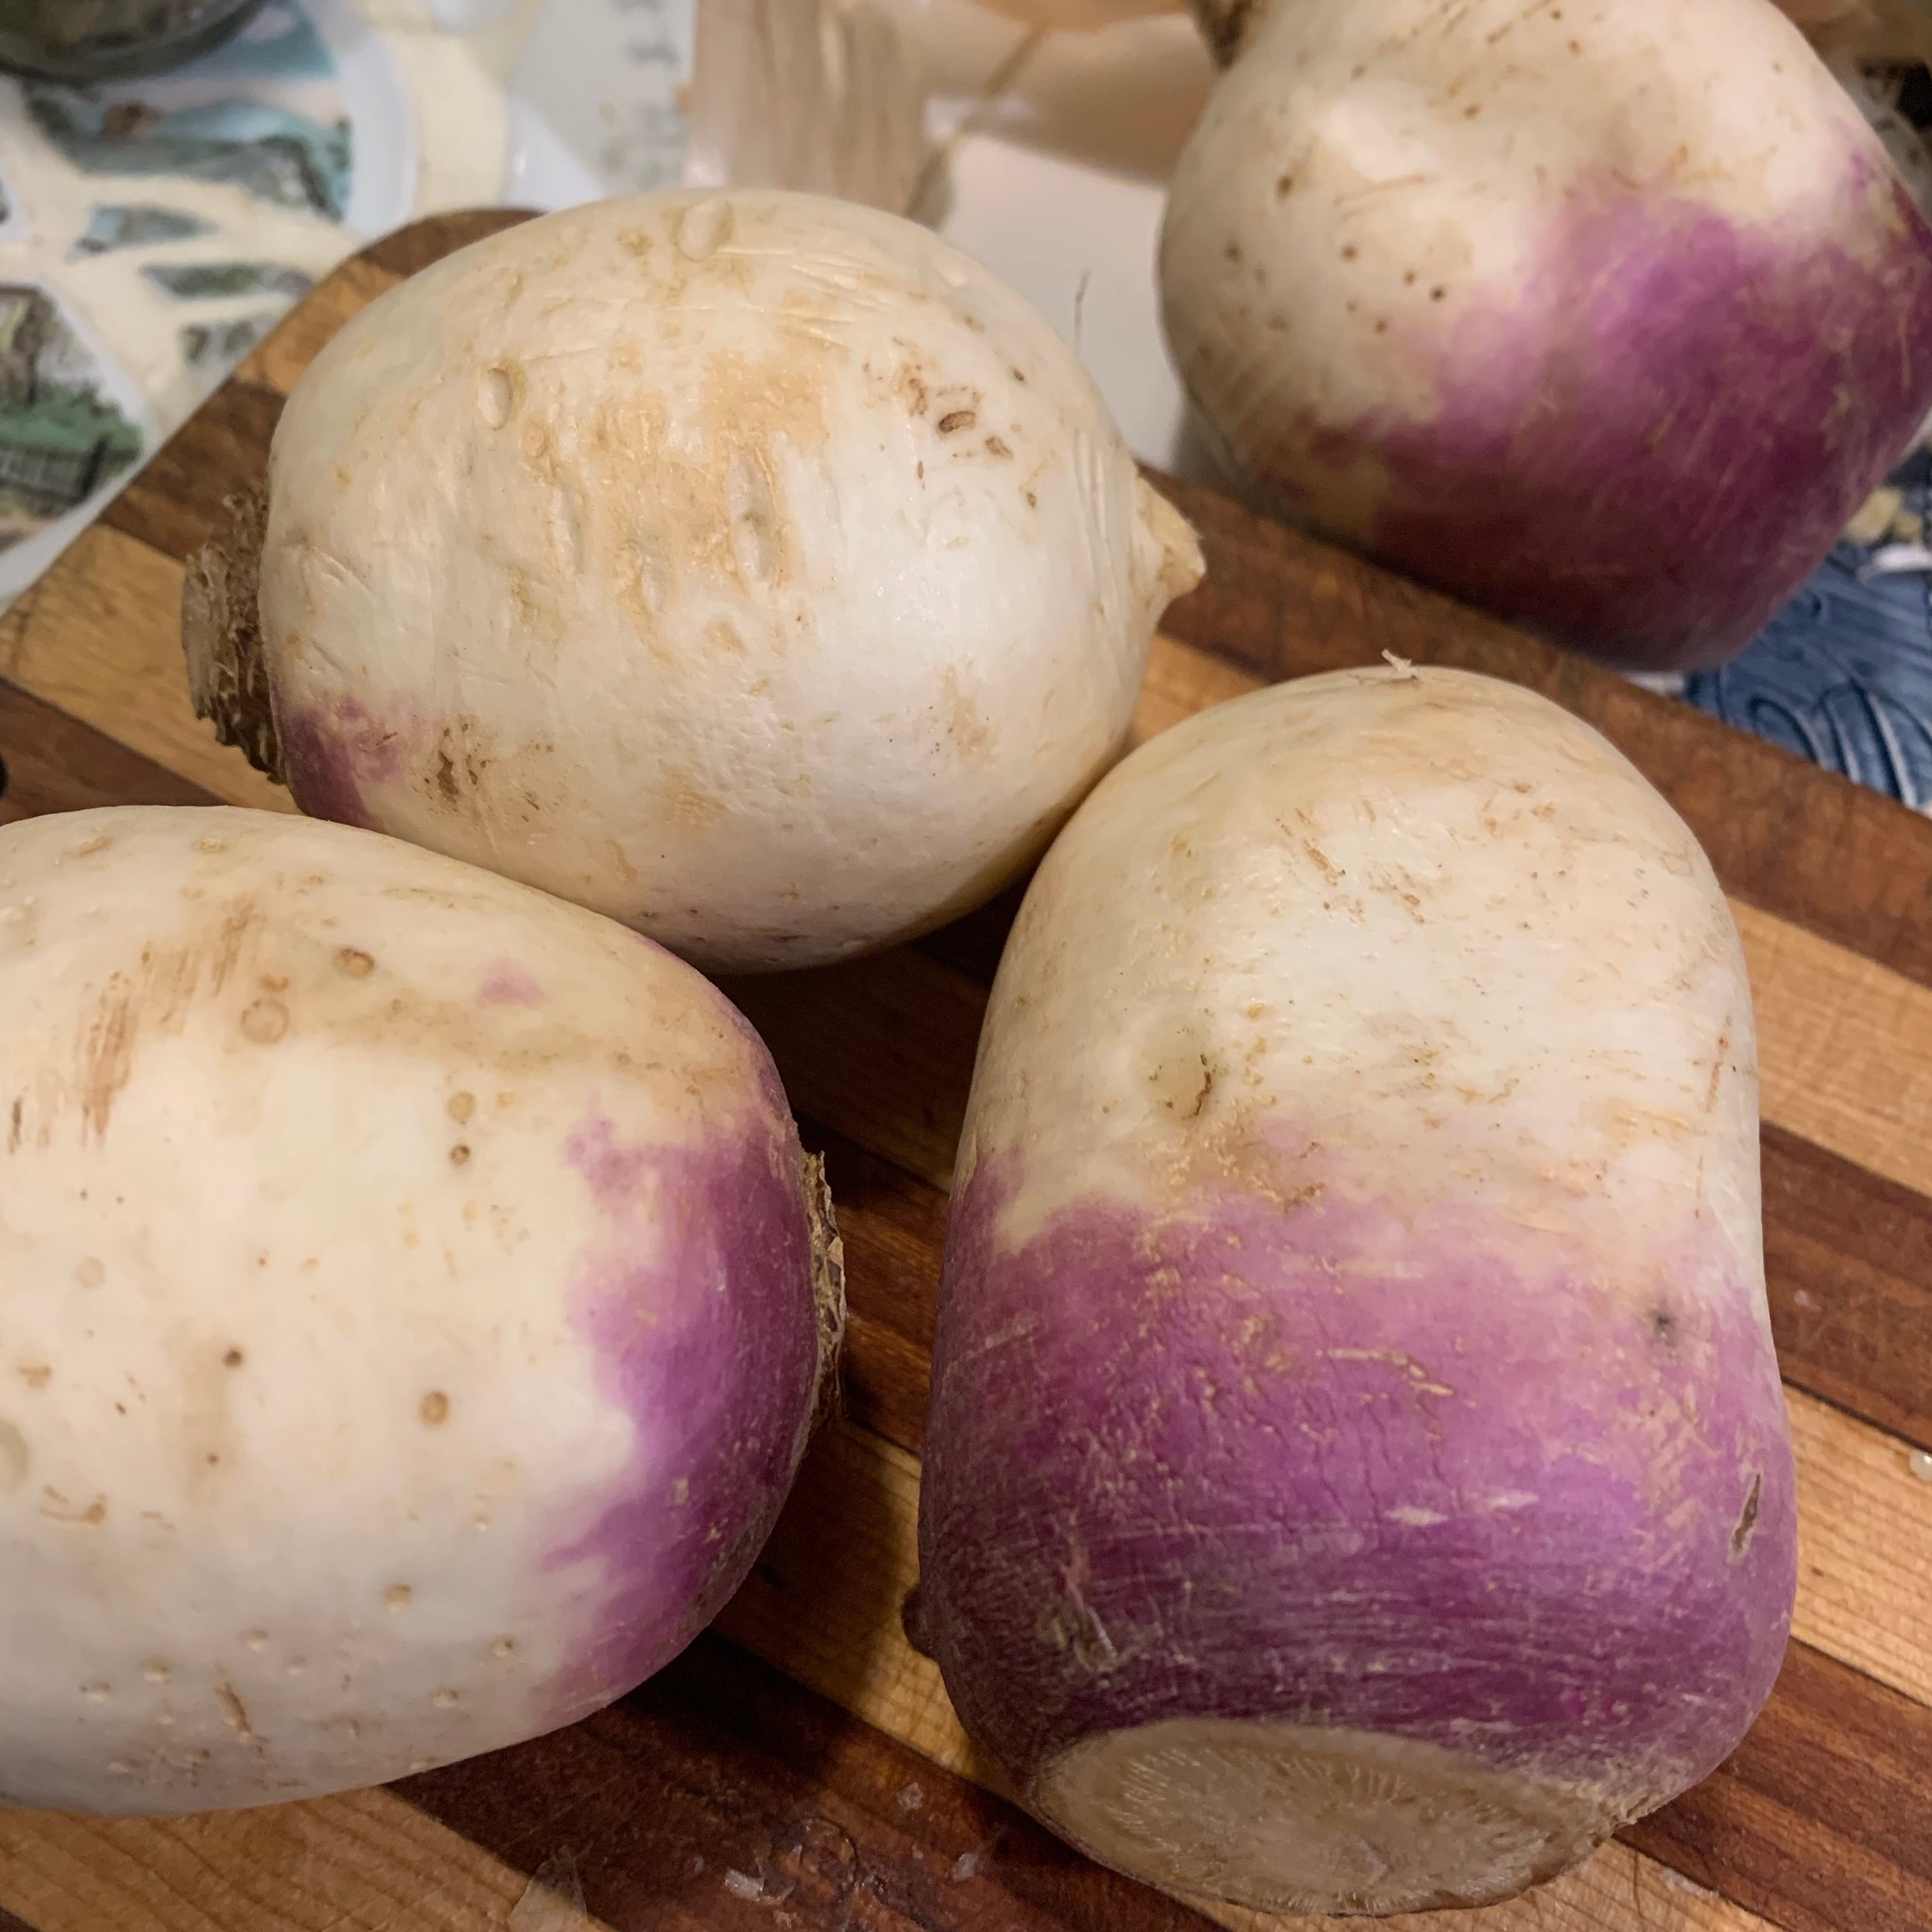 turnips are a fun white ingredient, lighter in taste than potato